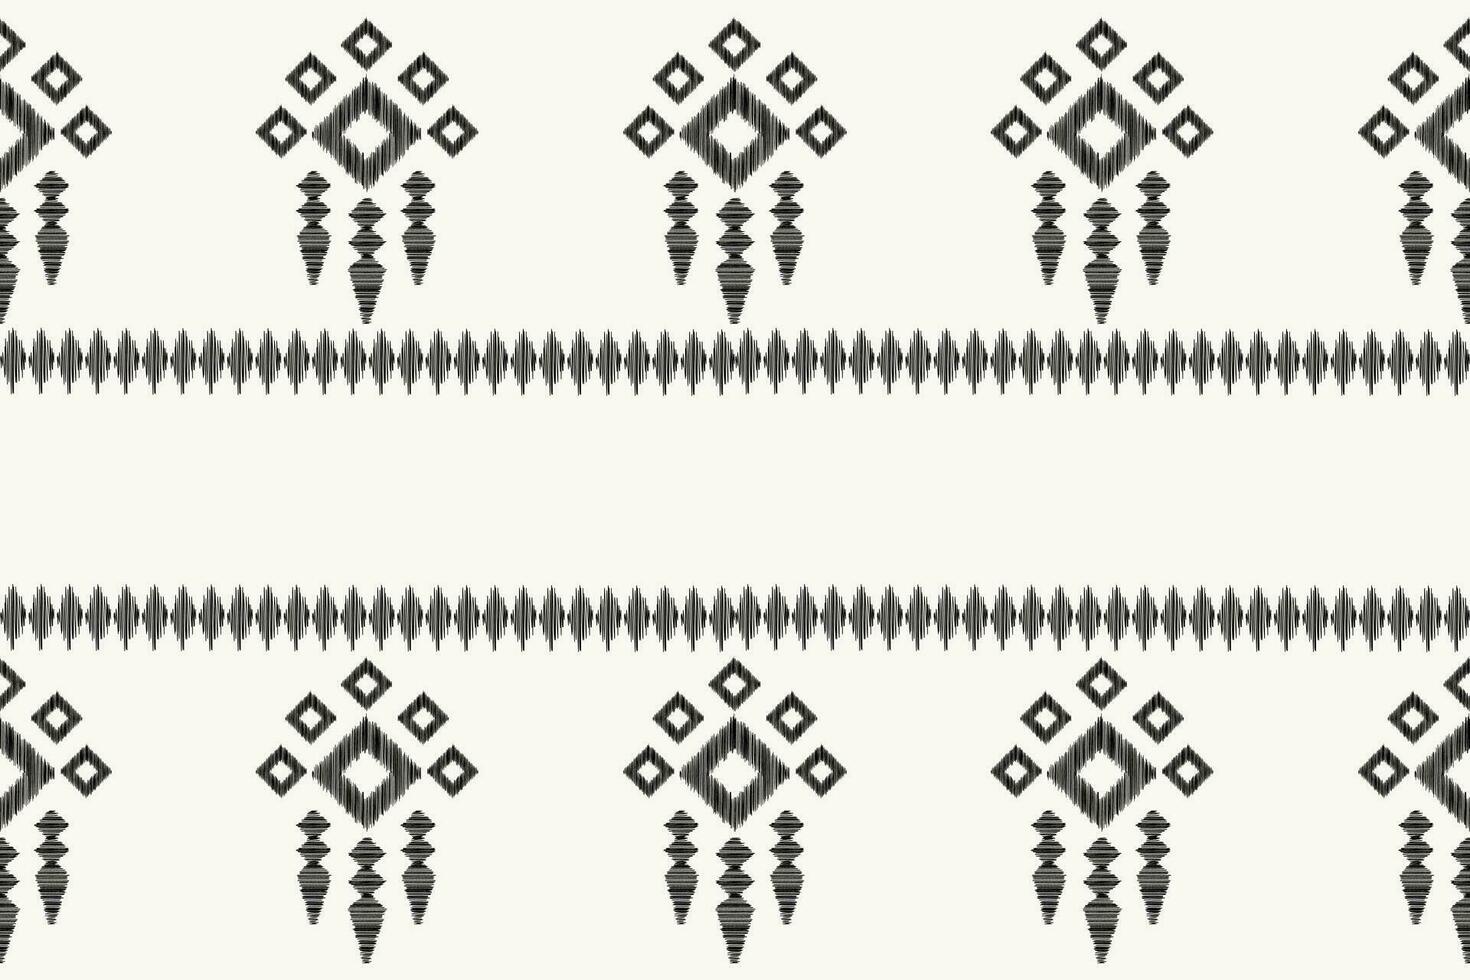 étnico ikat tecido padronizar geométrico estilo.africano ikat bordado étnico oriental padronizar Preto branco fundo. resumo,illustration.texture,vestuário,quadro,decoração,tapete,motivo. vetor